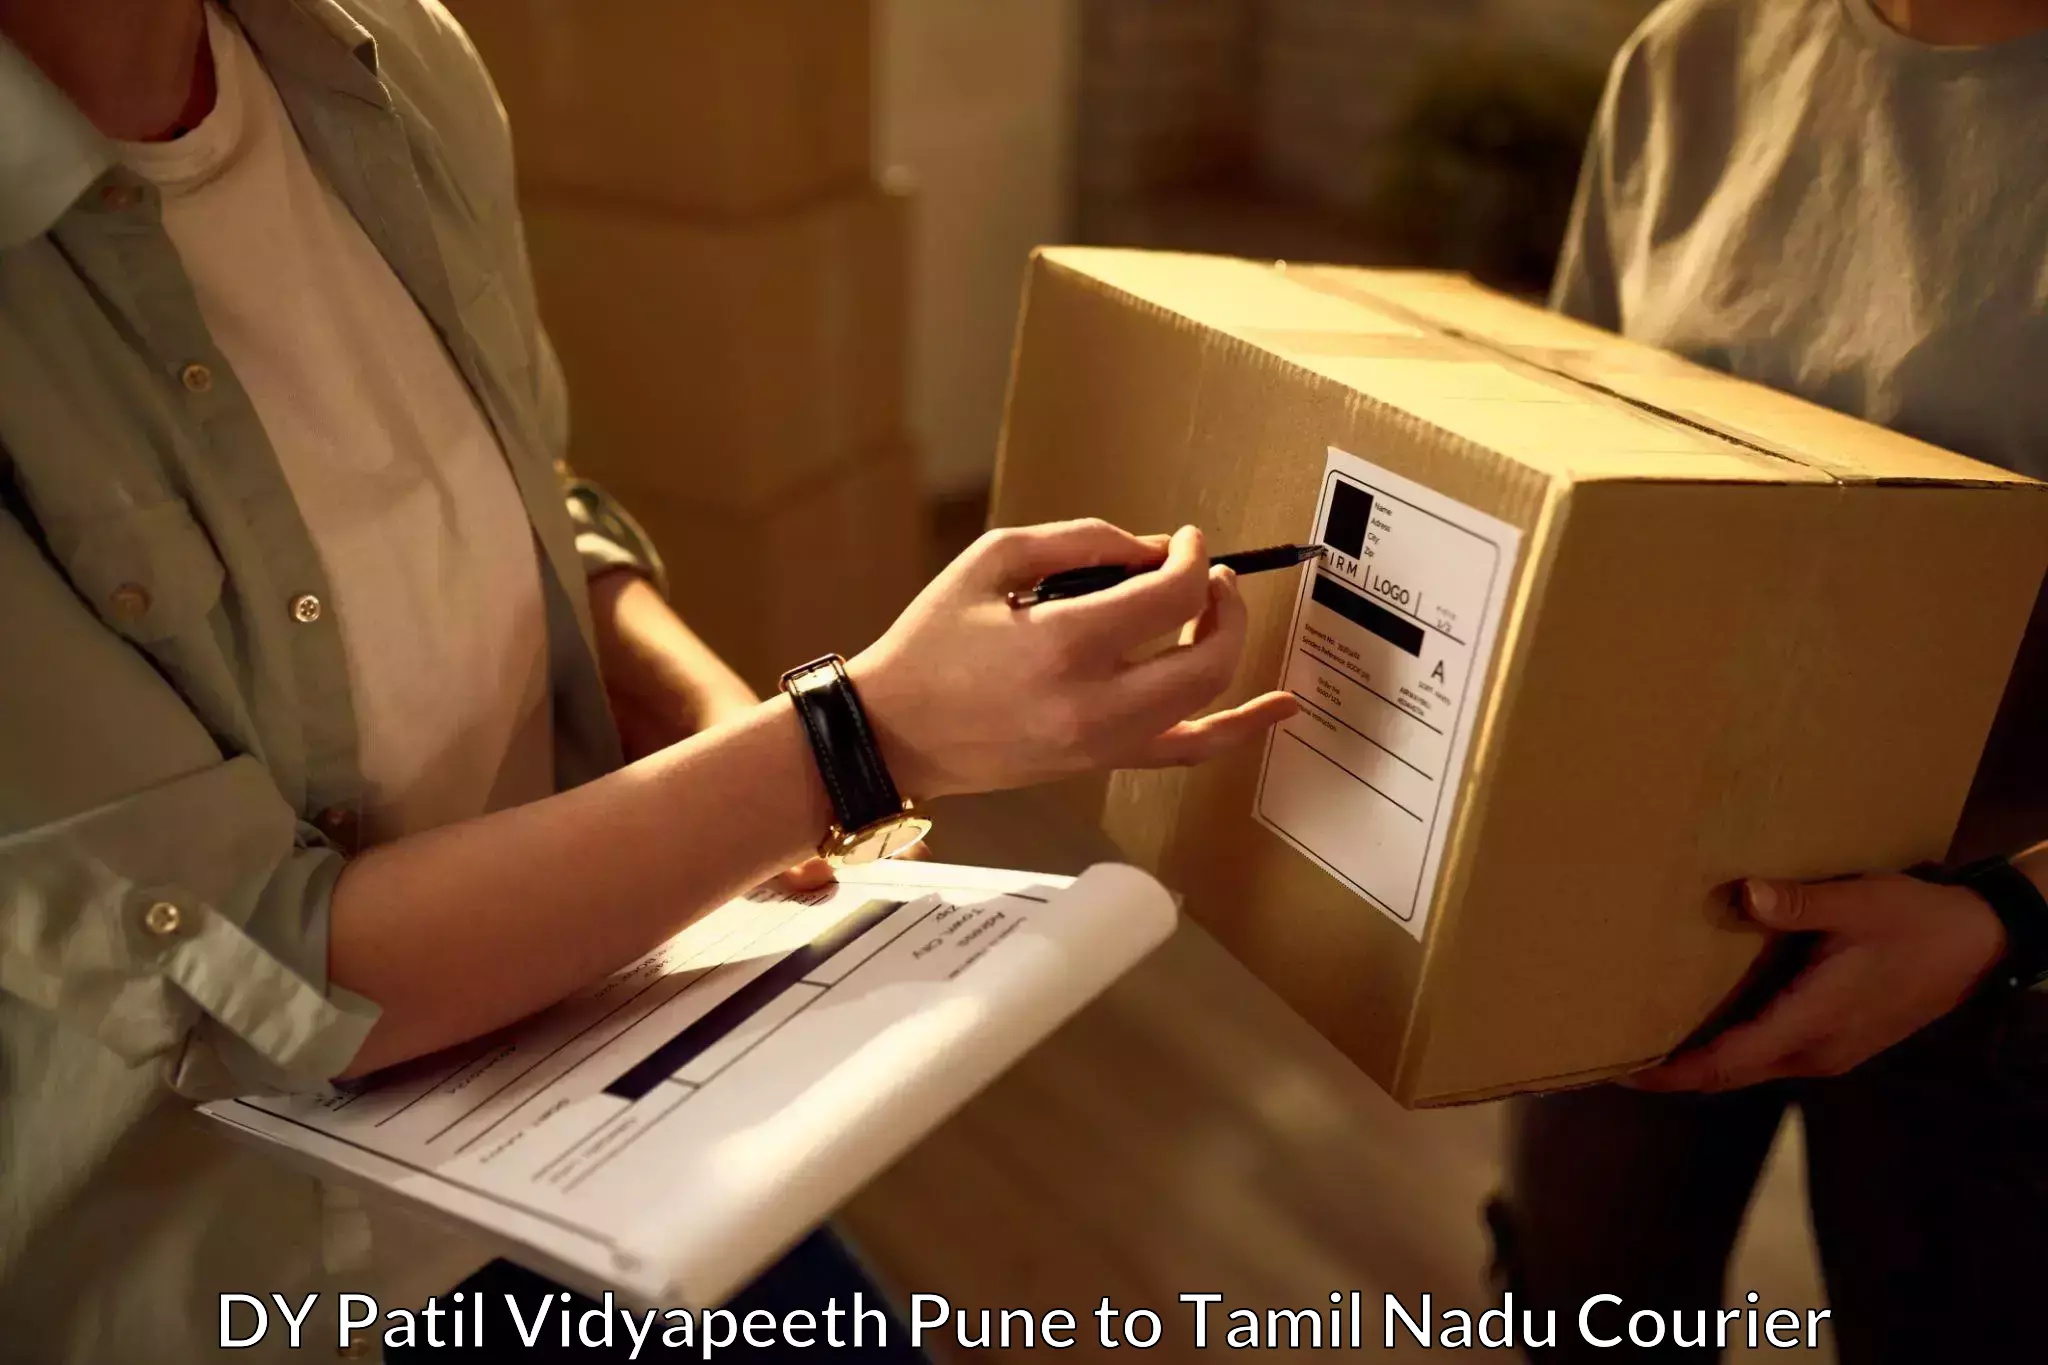 High-performance logistics DY Patil Vidyapeeth Pune to Tamil Nadu